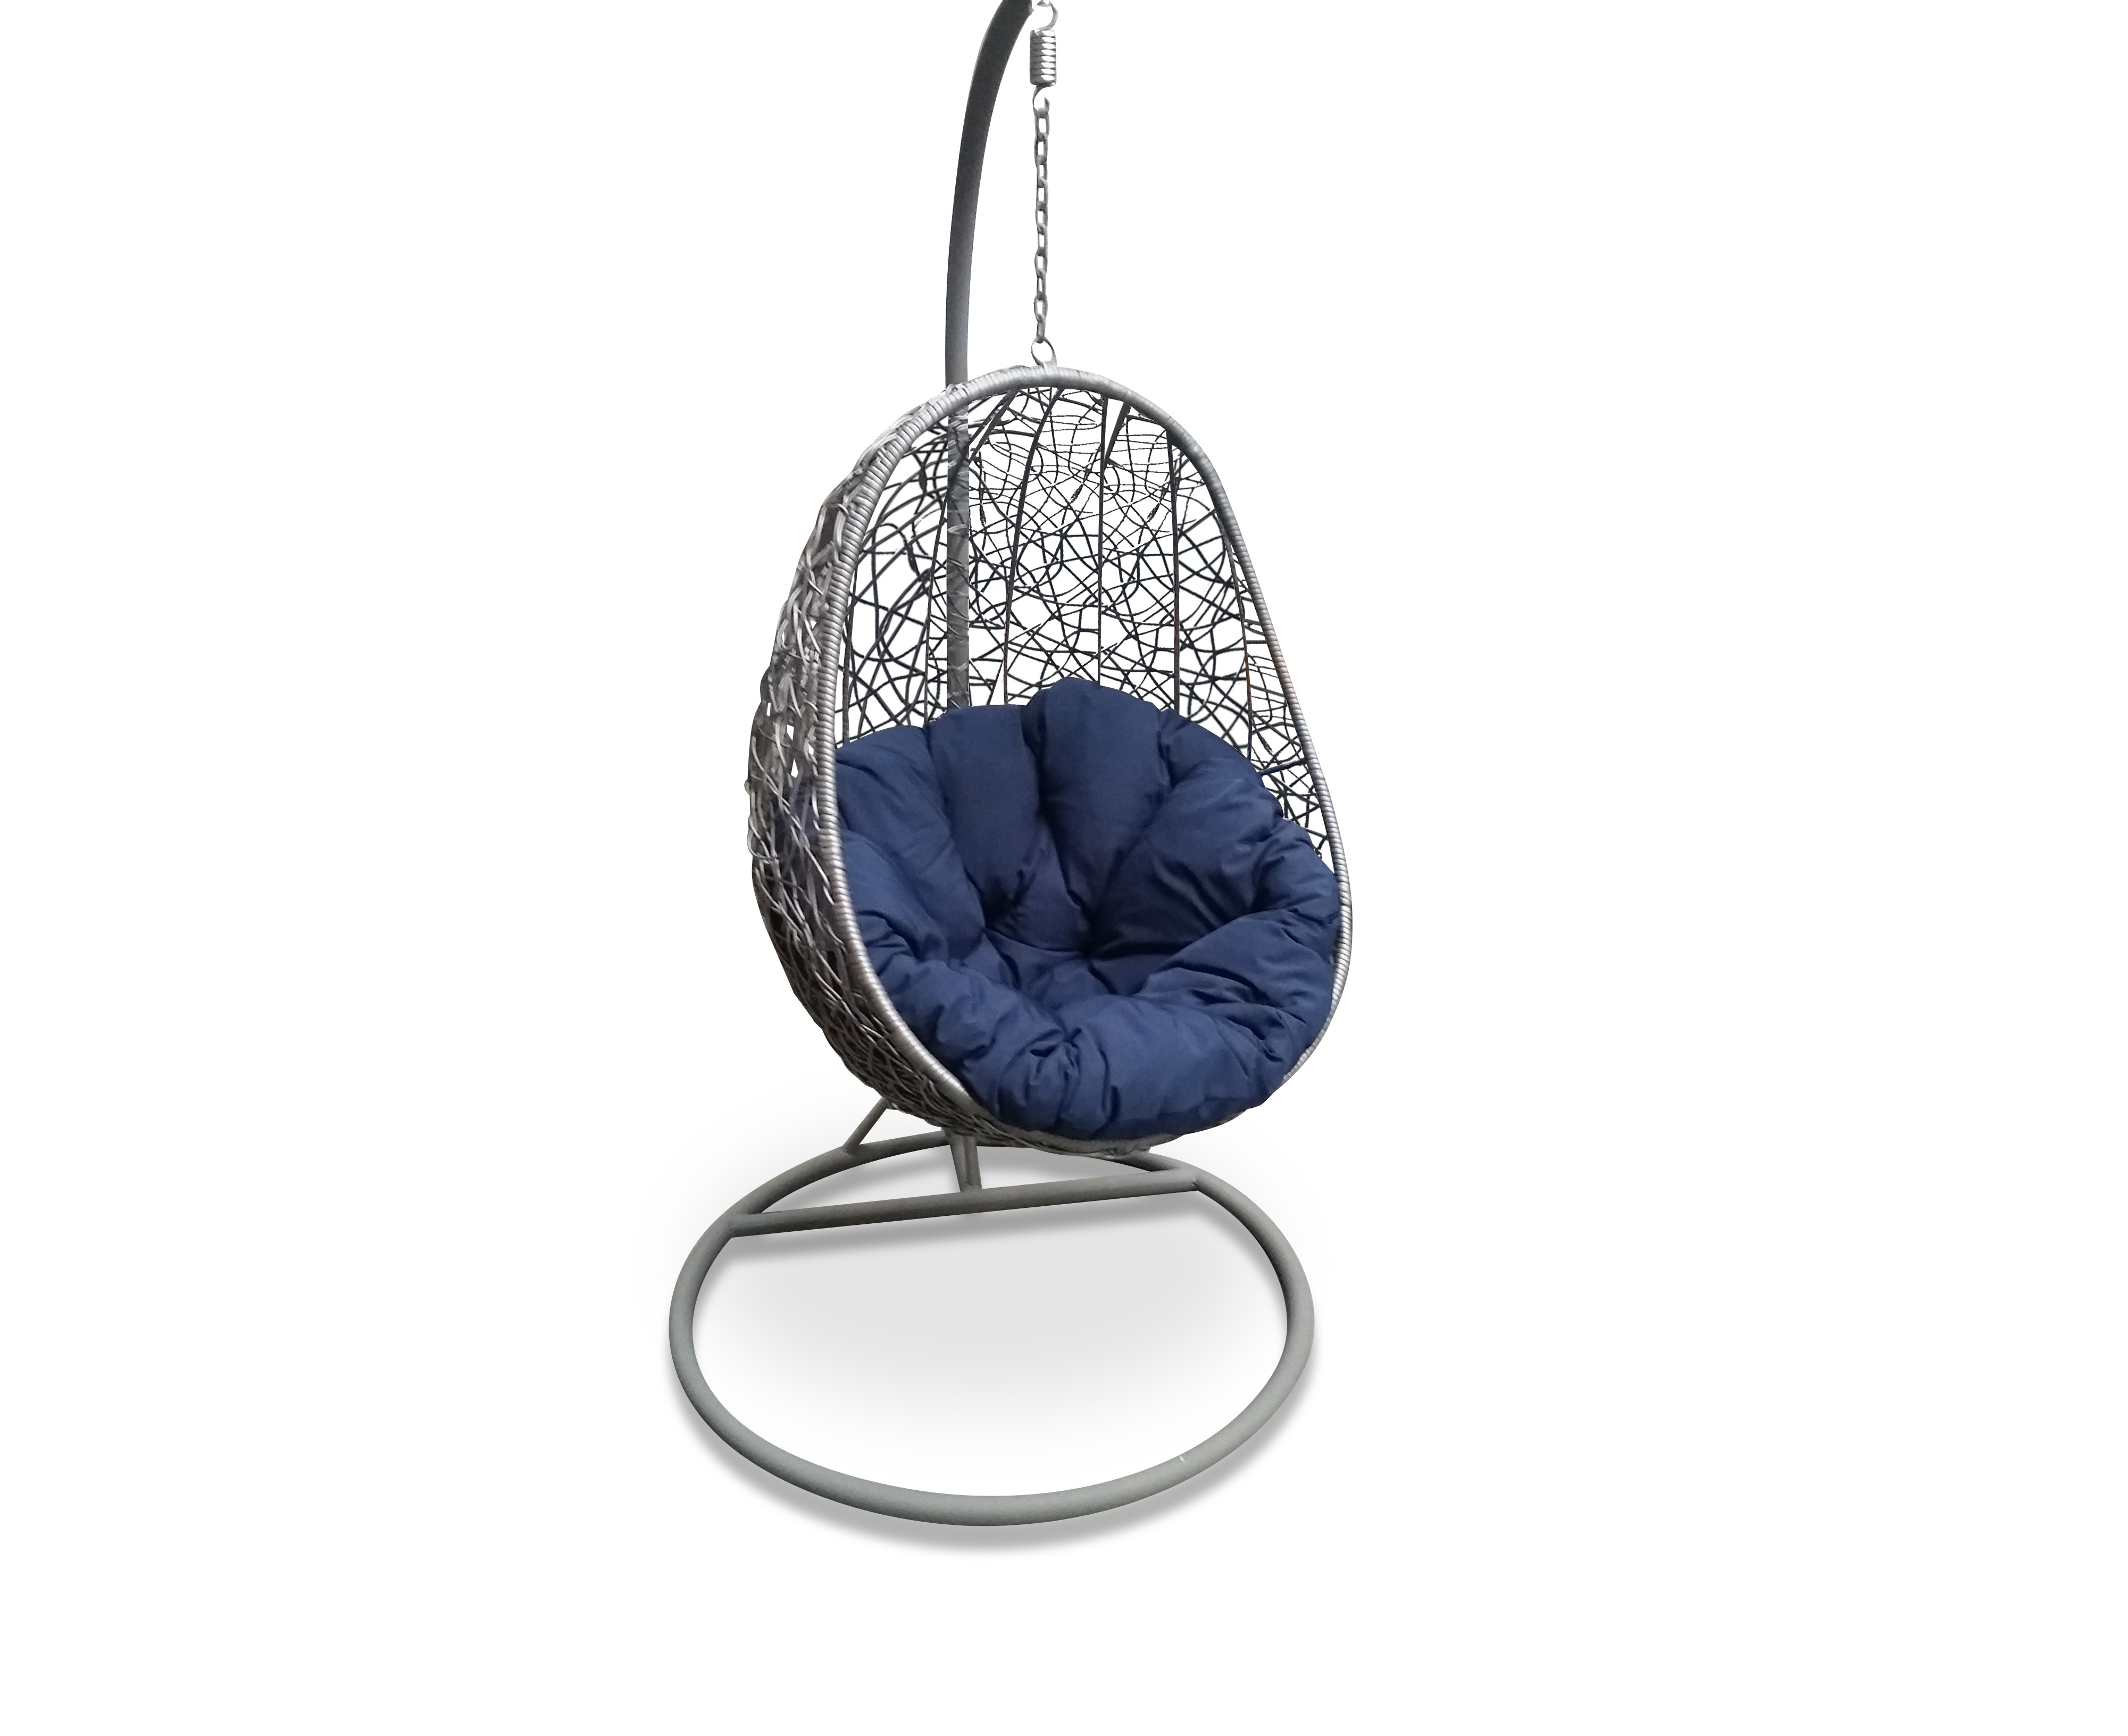 Cocoon Hanging Chair | Catch.com.au